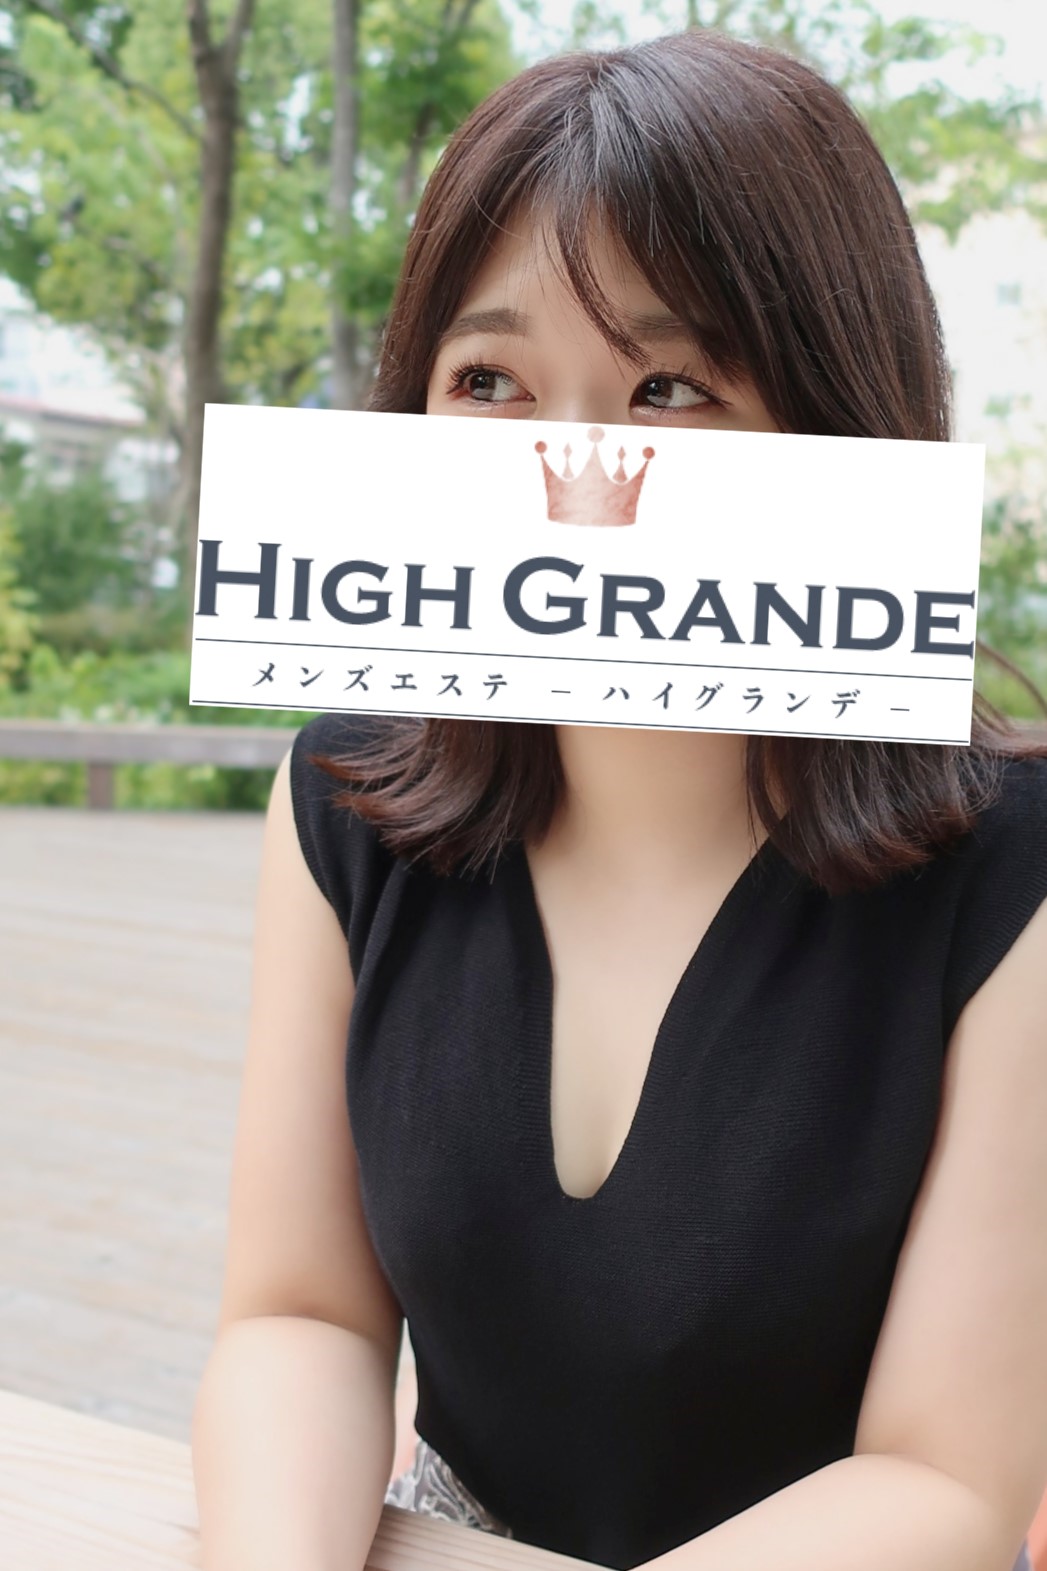 High Grande -ハイグランデ- 赤坂見附・永田町ルーム|一ノ瀬 めい